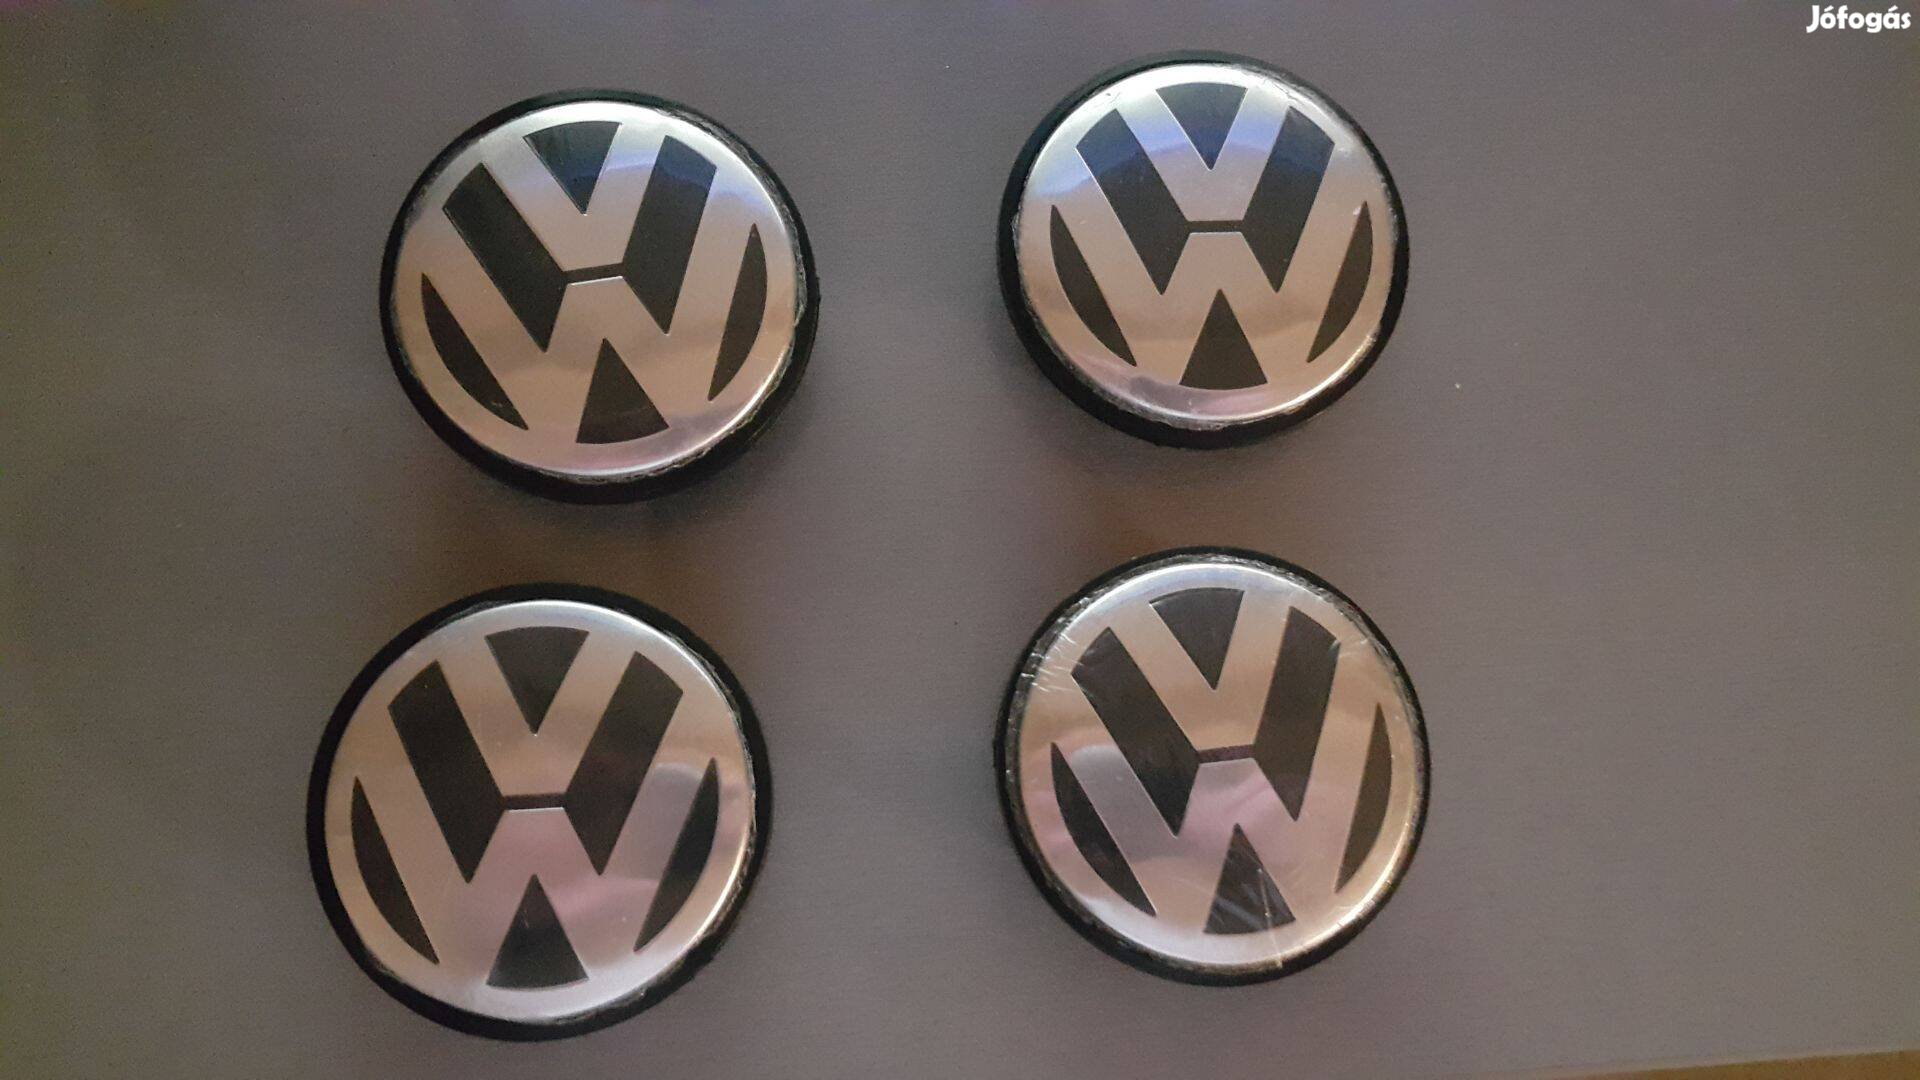 VW Volkswagen alufelni felni kupak közép porvédő 3B7601171 65mm